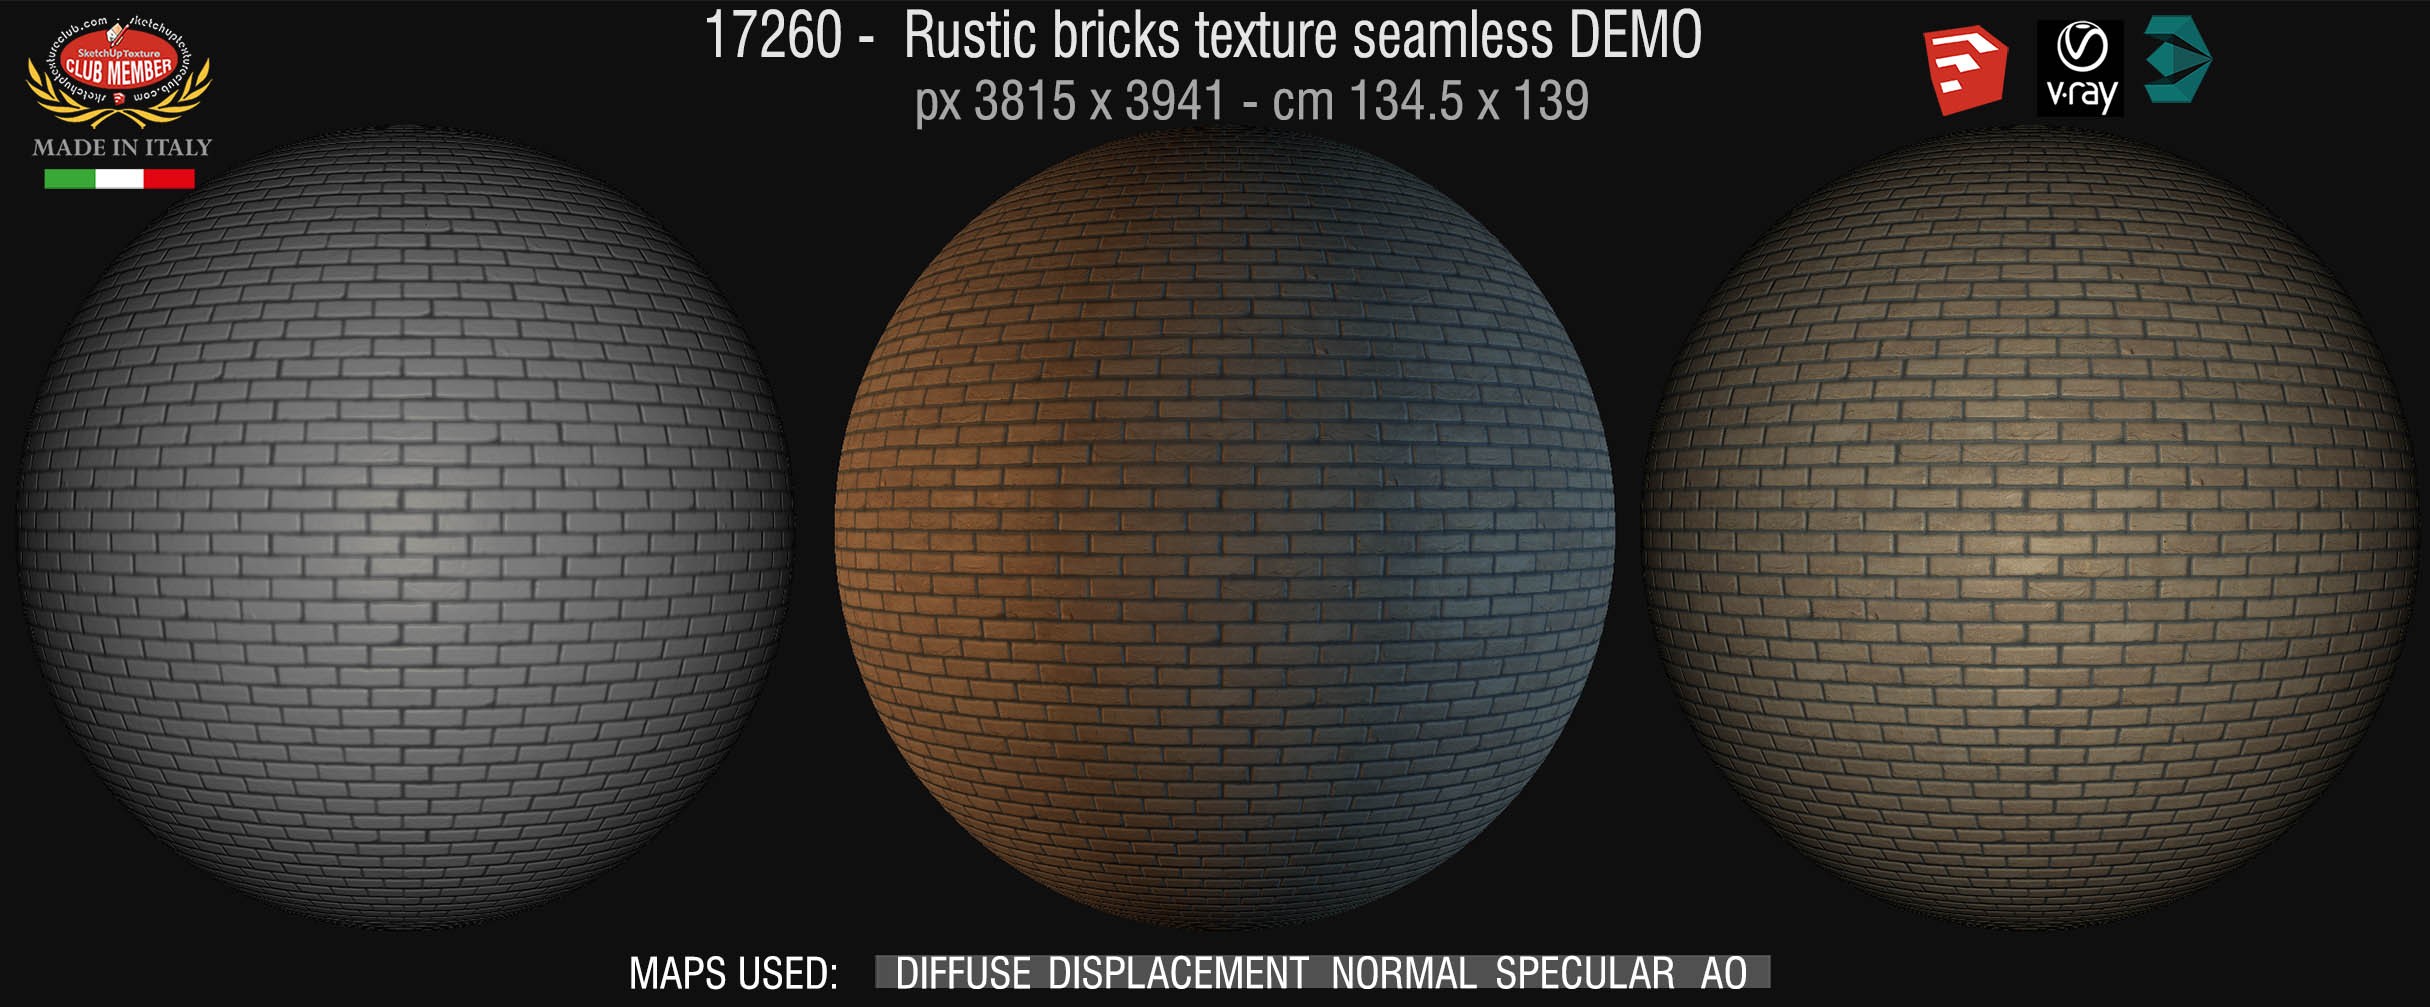 17260 Rustic bricks texture seamless + maps DEMO